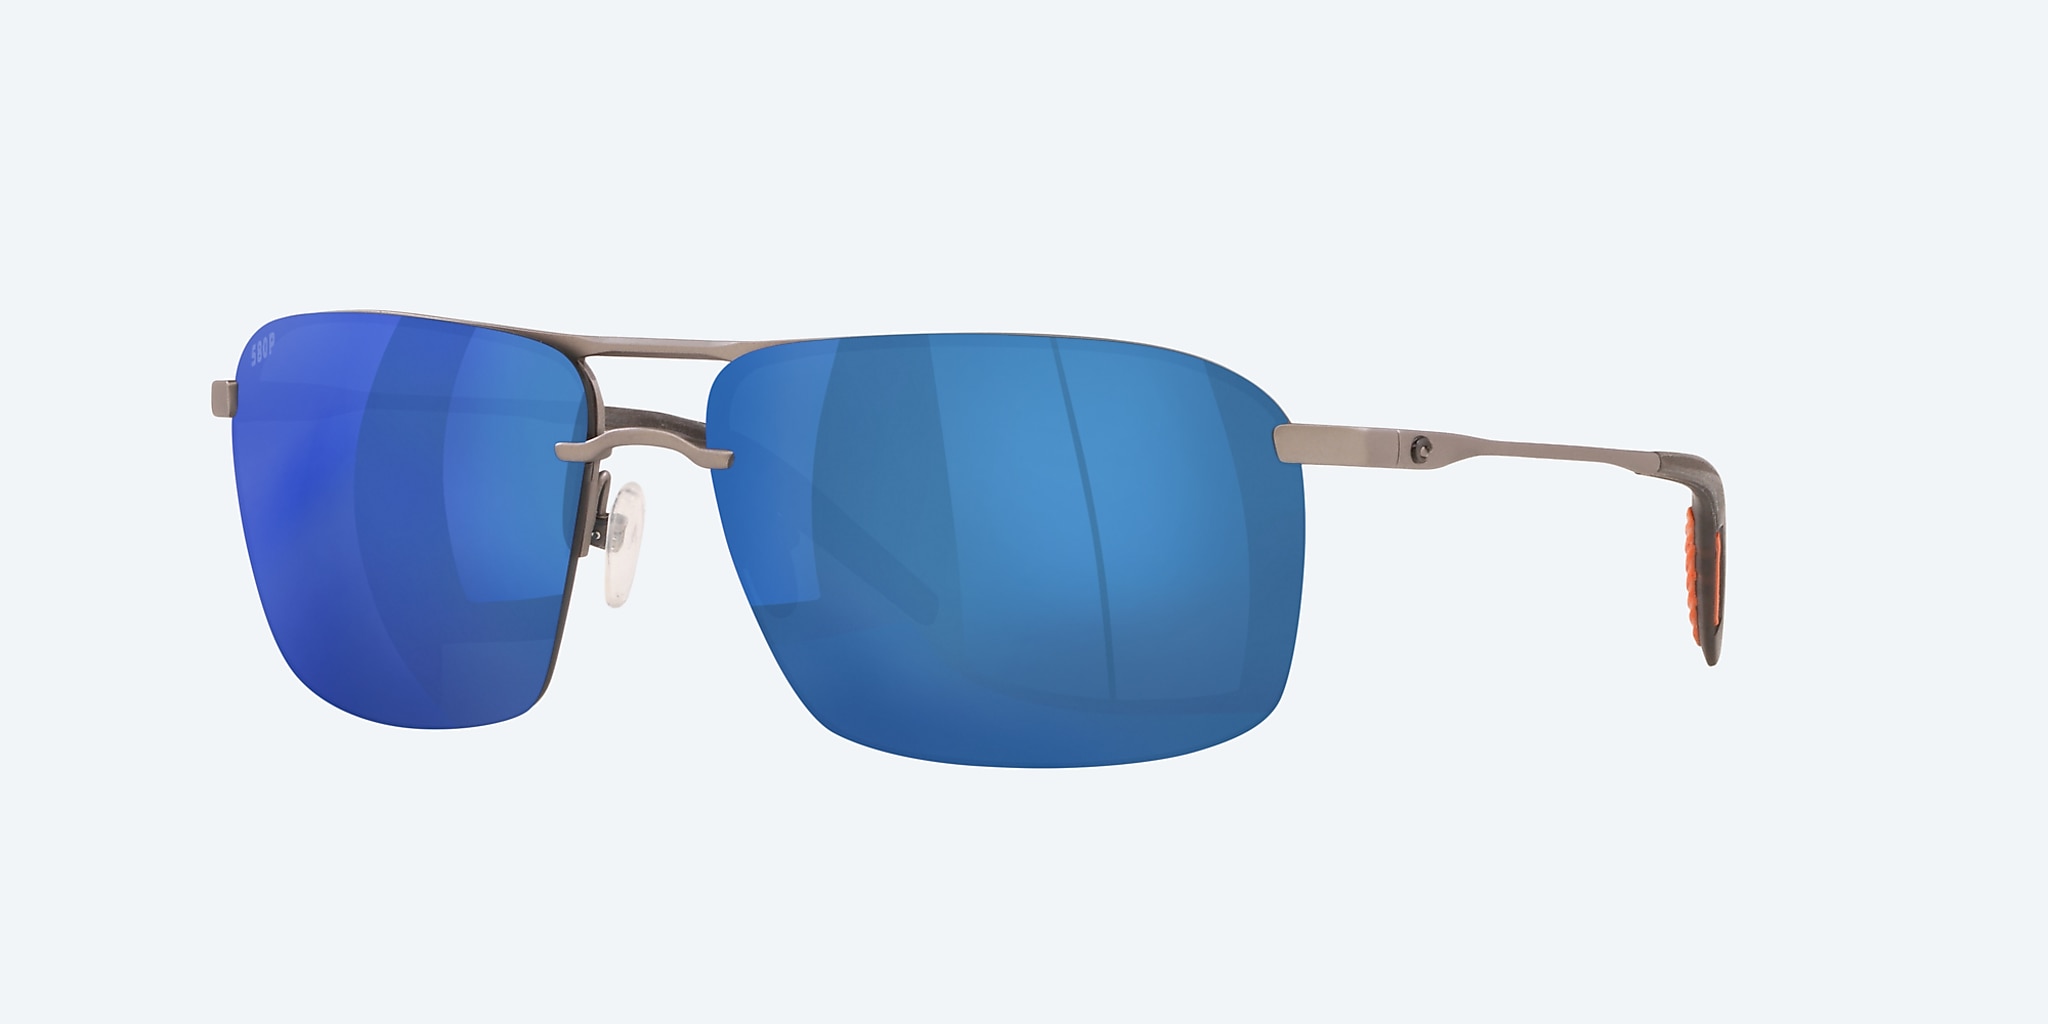 Charm polarized sunglasses for men and women – Sexikinis Swim